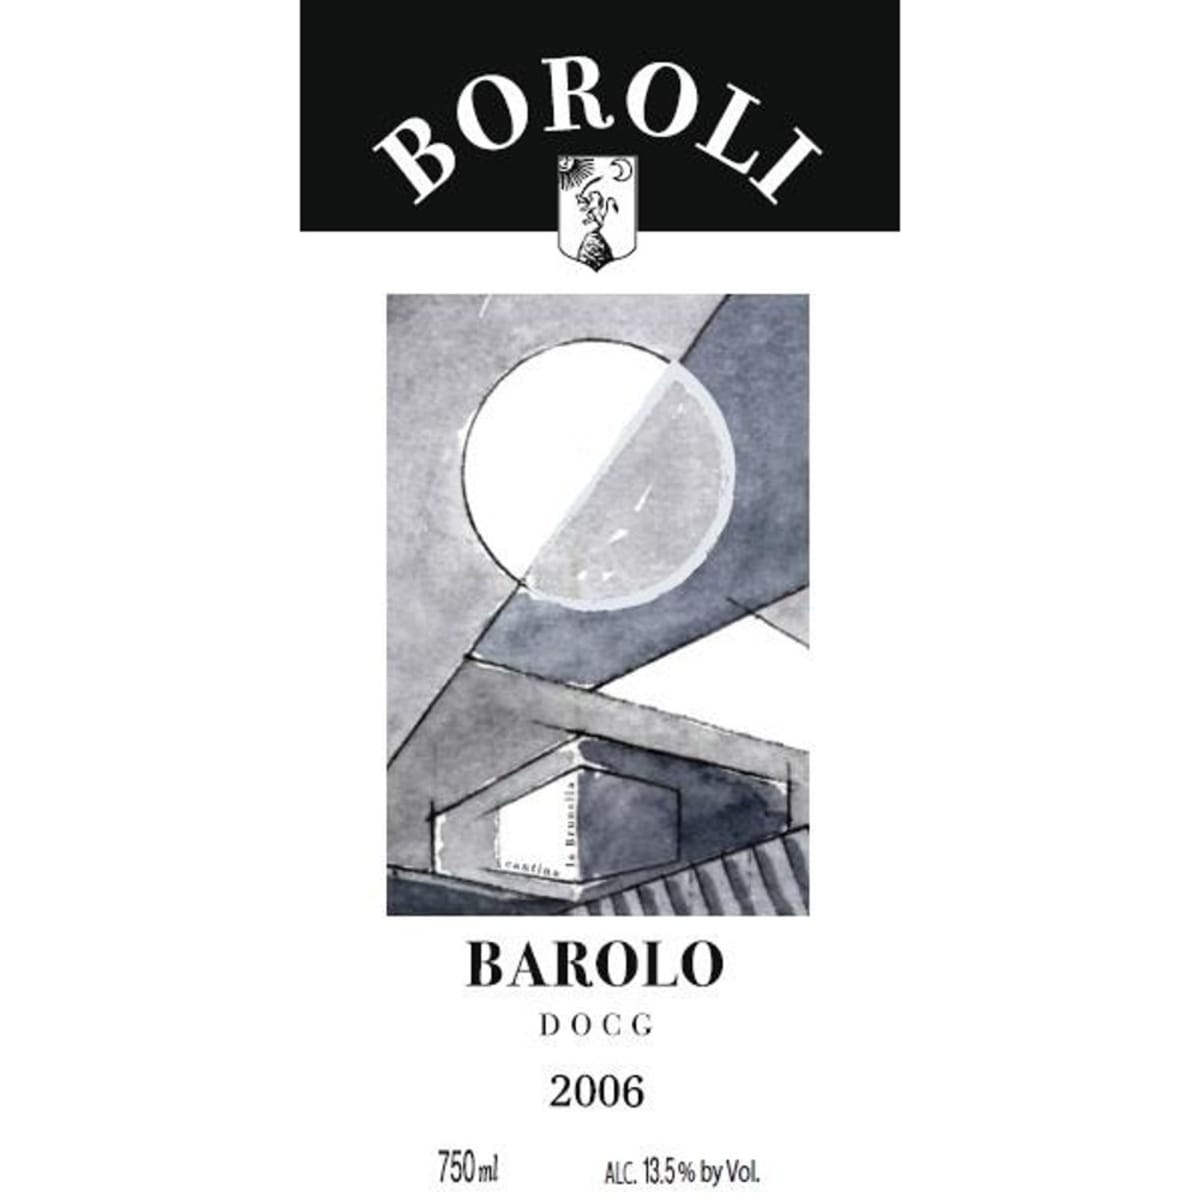 Boroli Barolo 2006 Front Label